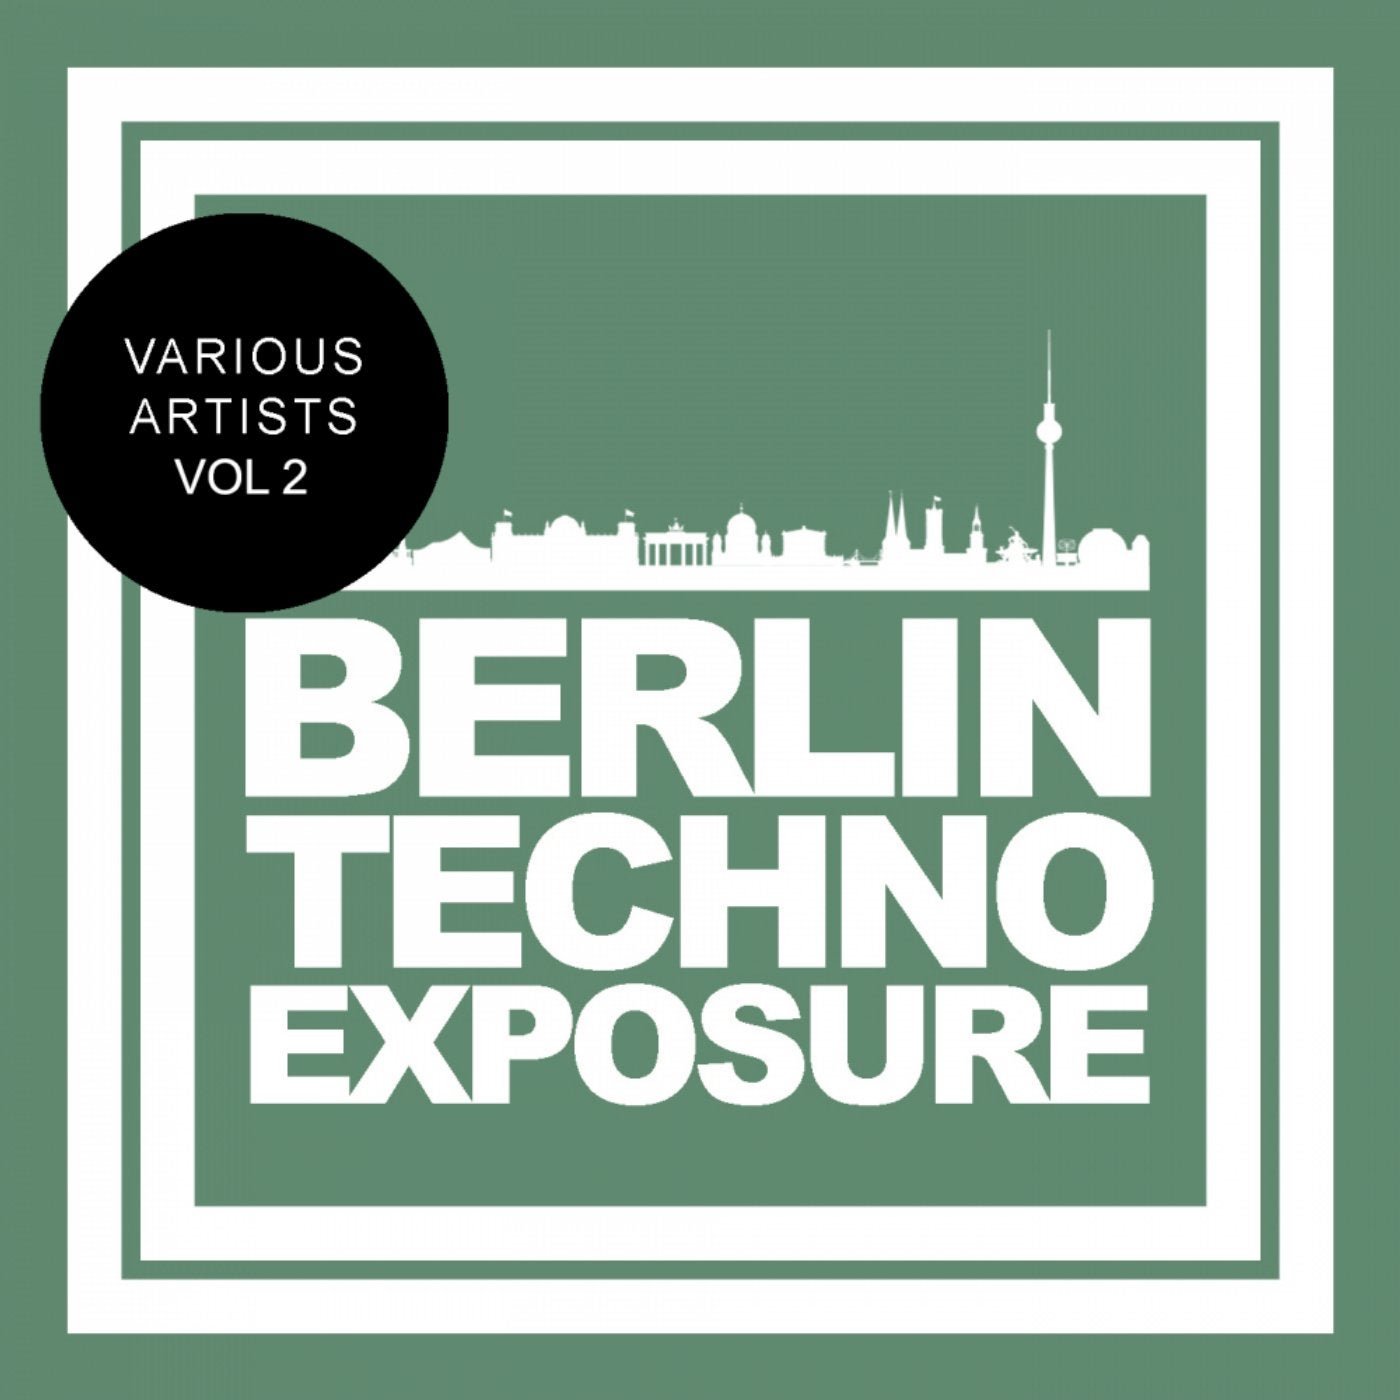 Berlin Techno Exposure, Vol.2